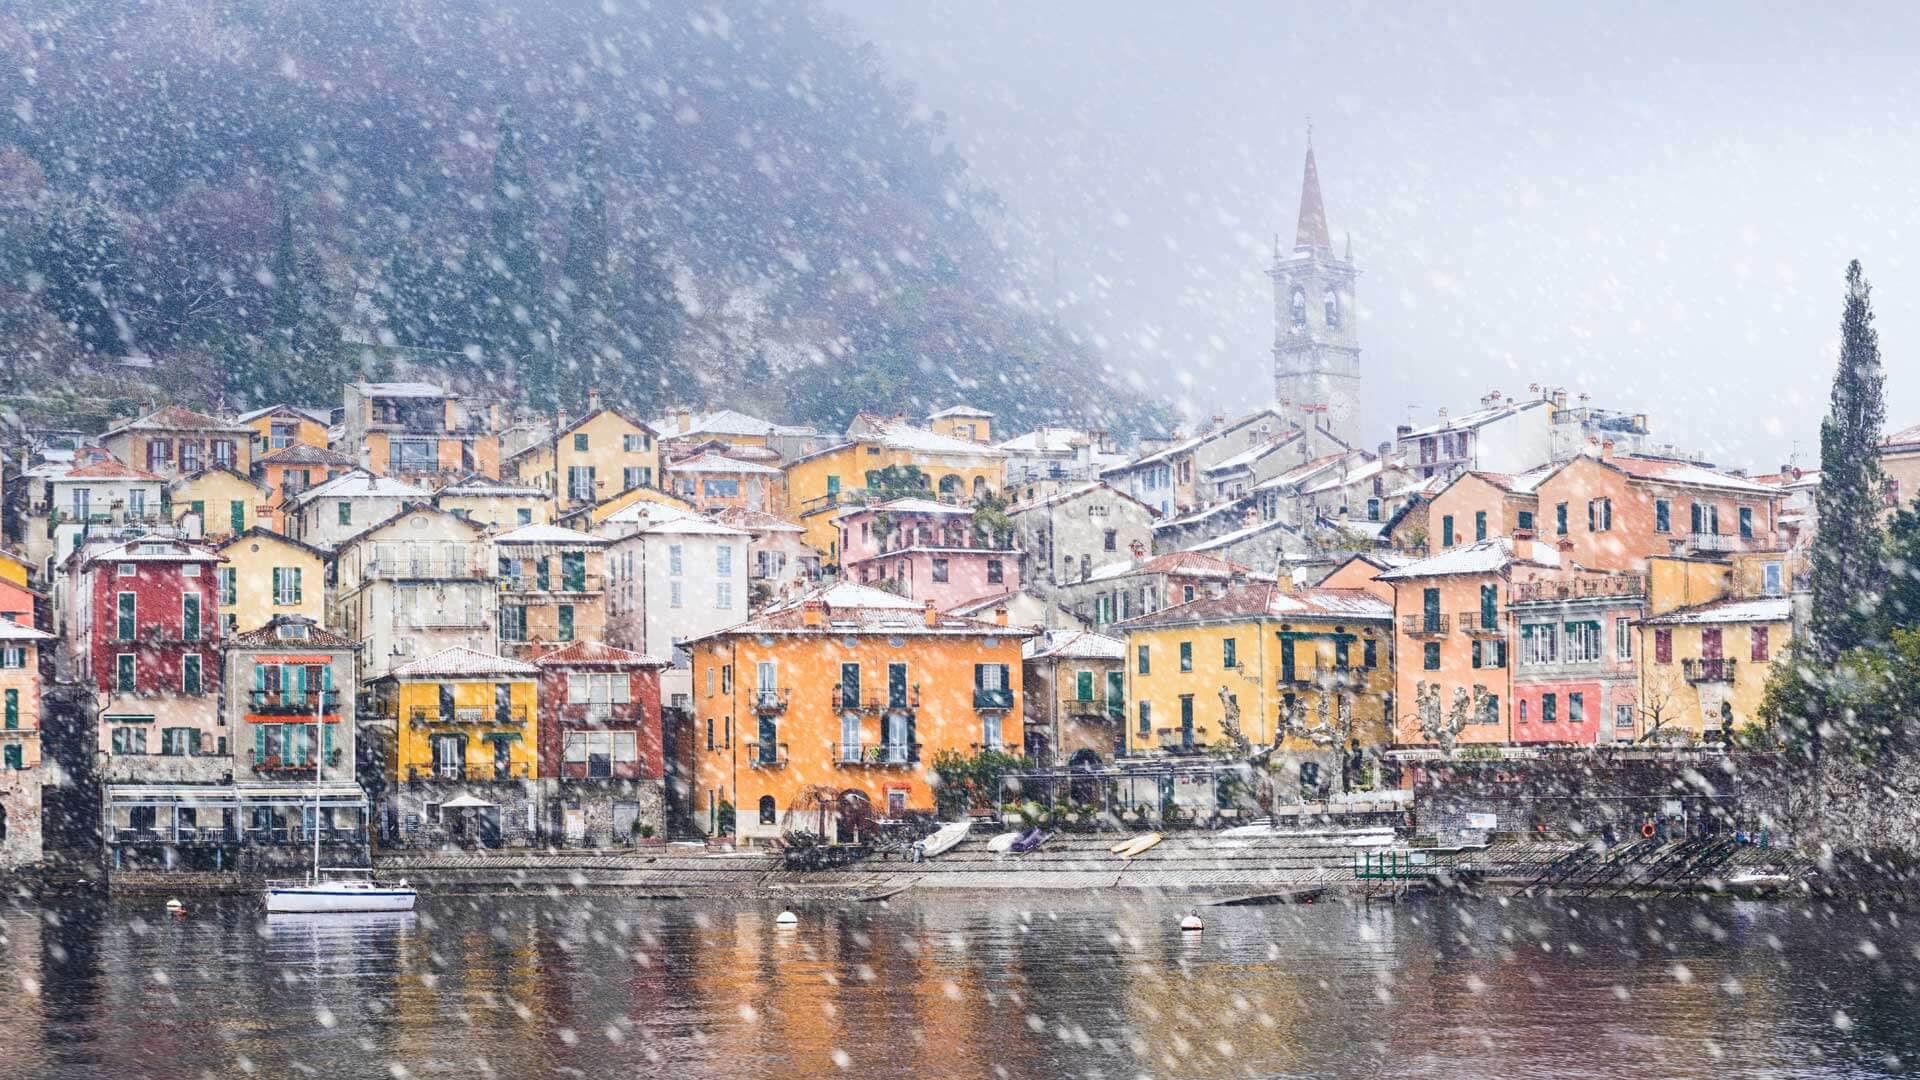 Snow falls on Lake Como